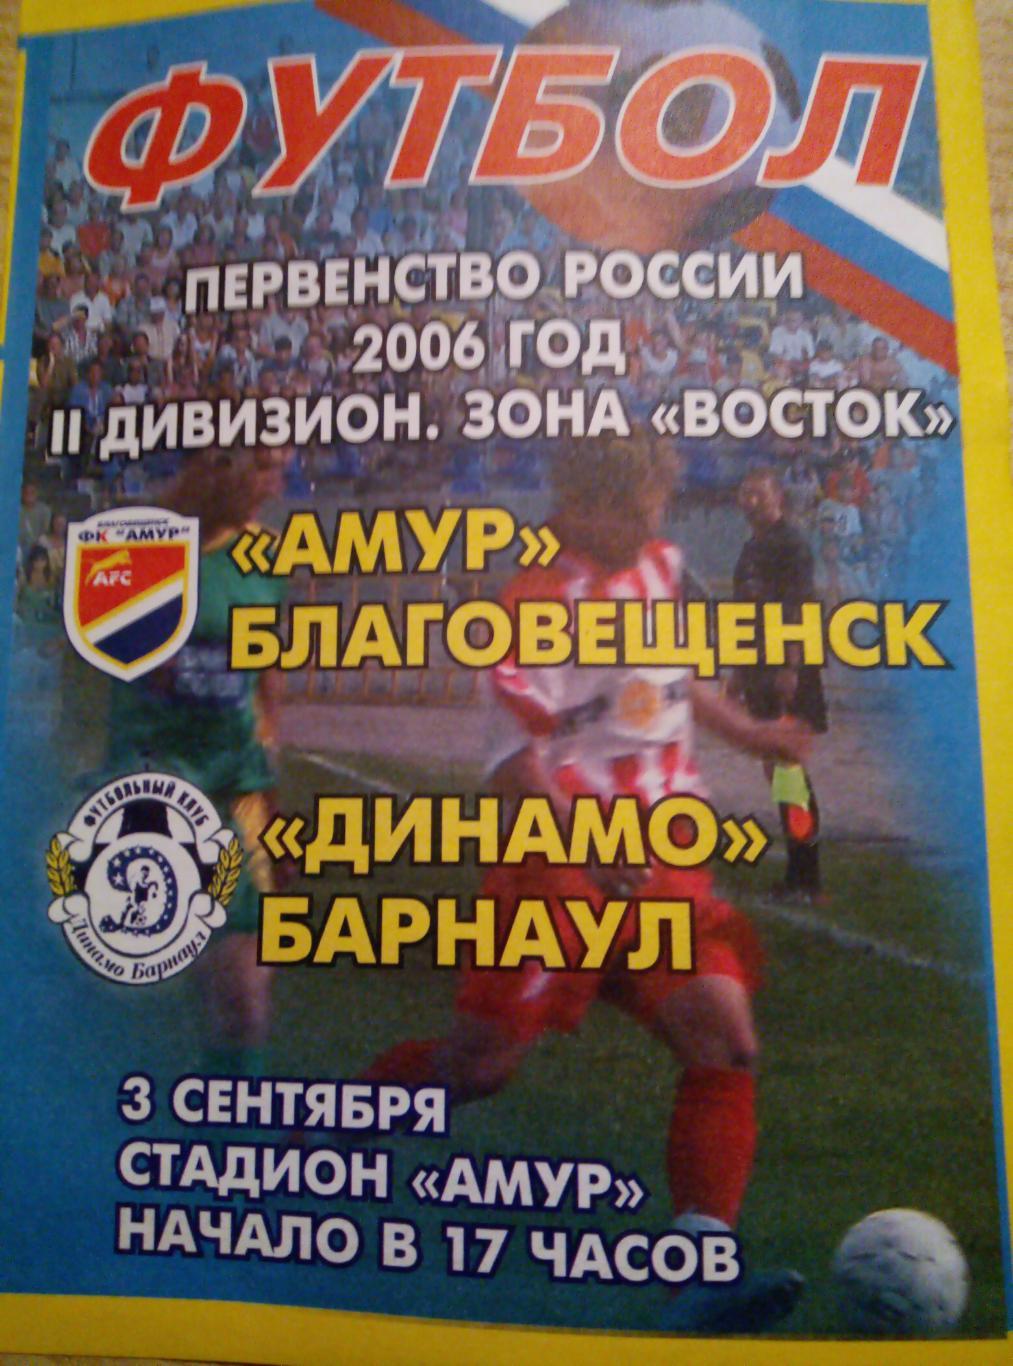 Амур Благовещенск - Динамо Барнаул - 03.09.2006 (официальная)